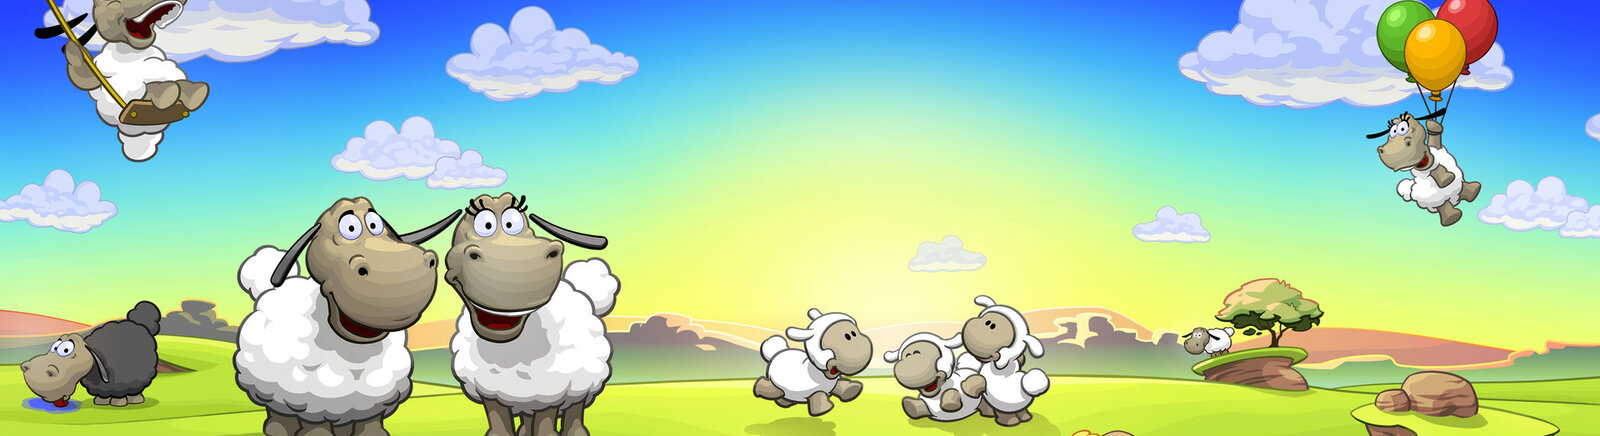 Дата выхода Clouds & Sheep 2  на PC, PS4 и Xbox One в России и во всем мире